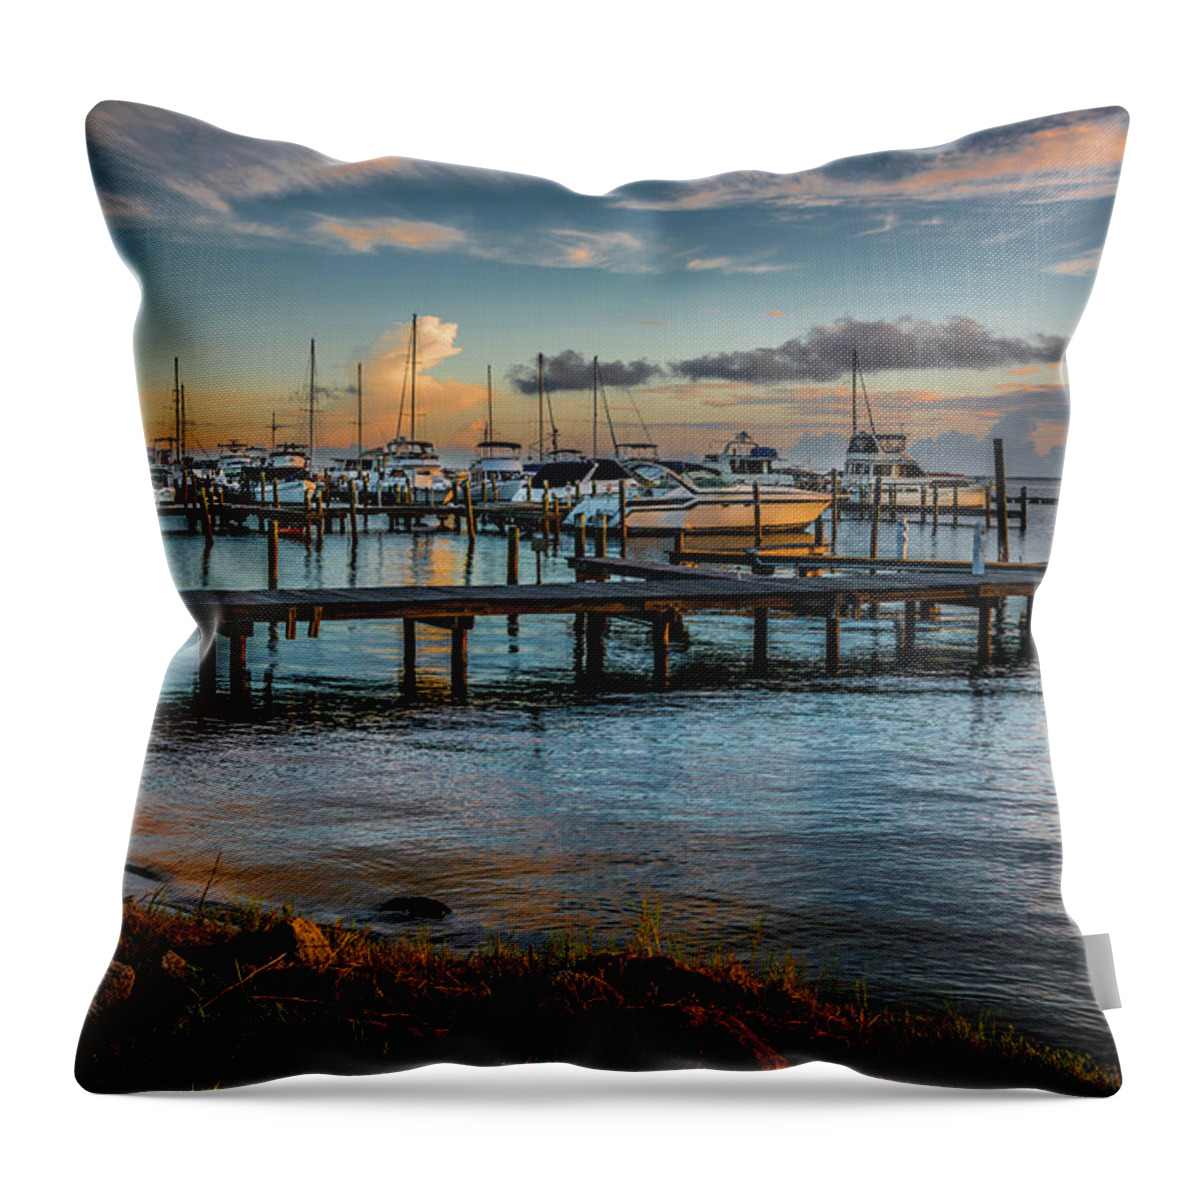 Dock Throw Pillow featuring the photograph Titusville Dock by Jaime Mercado